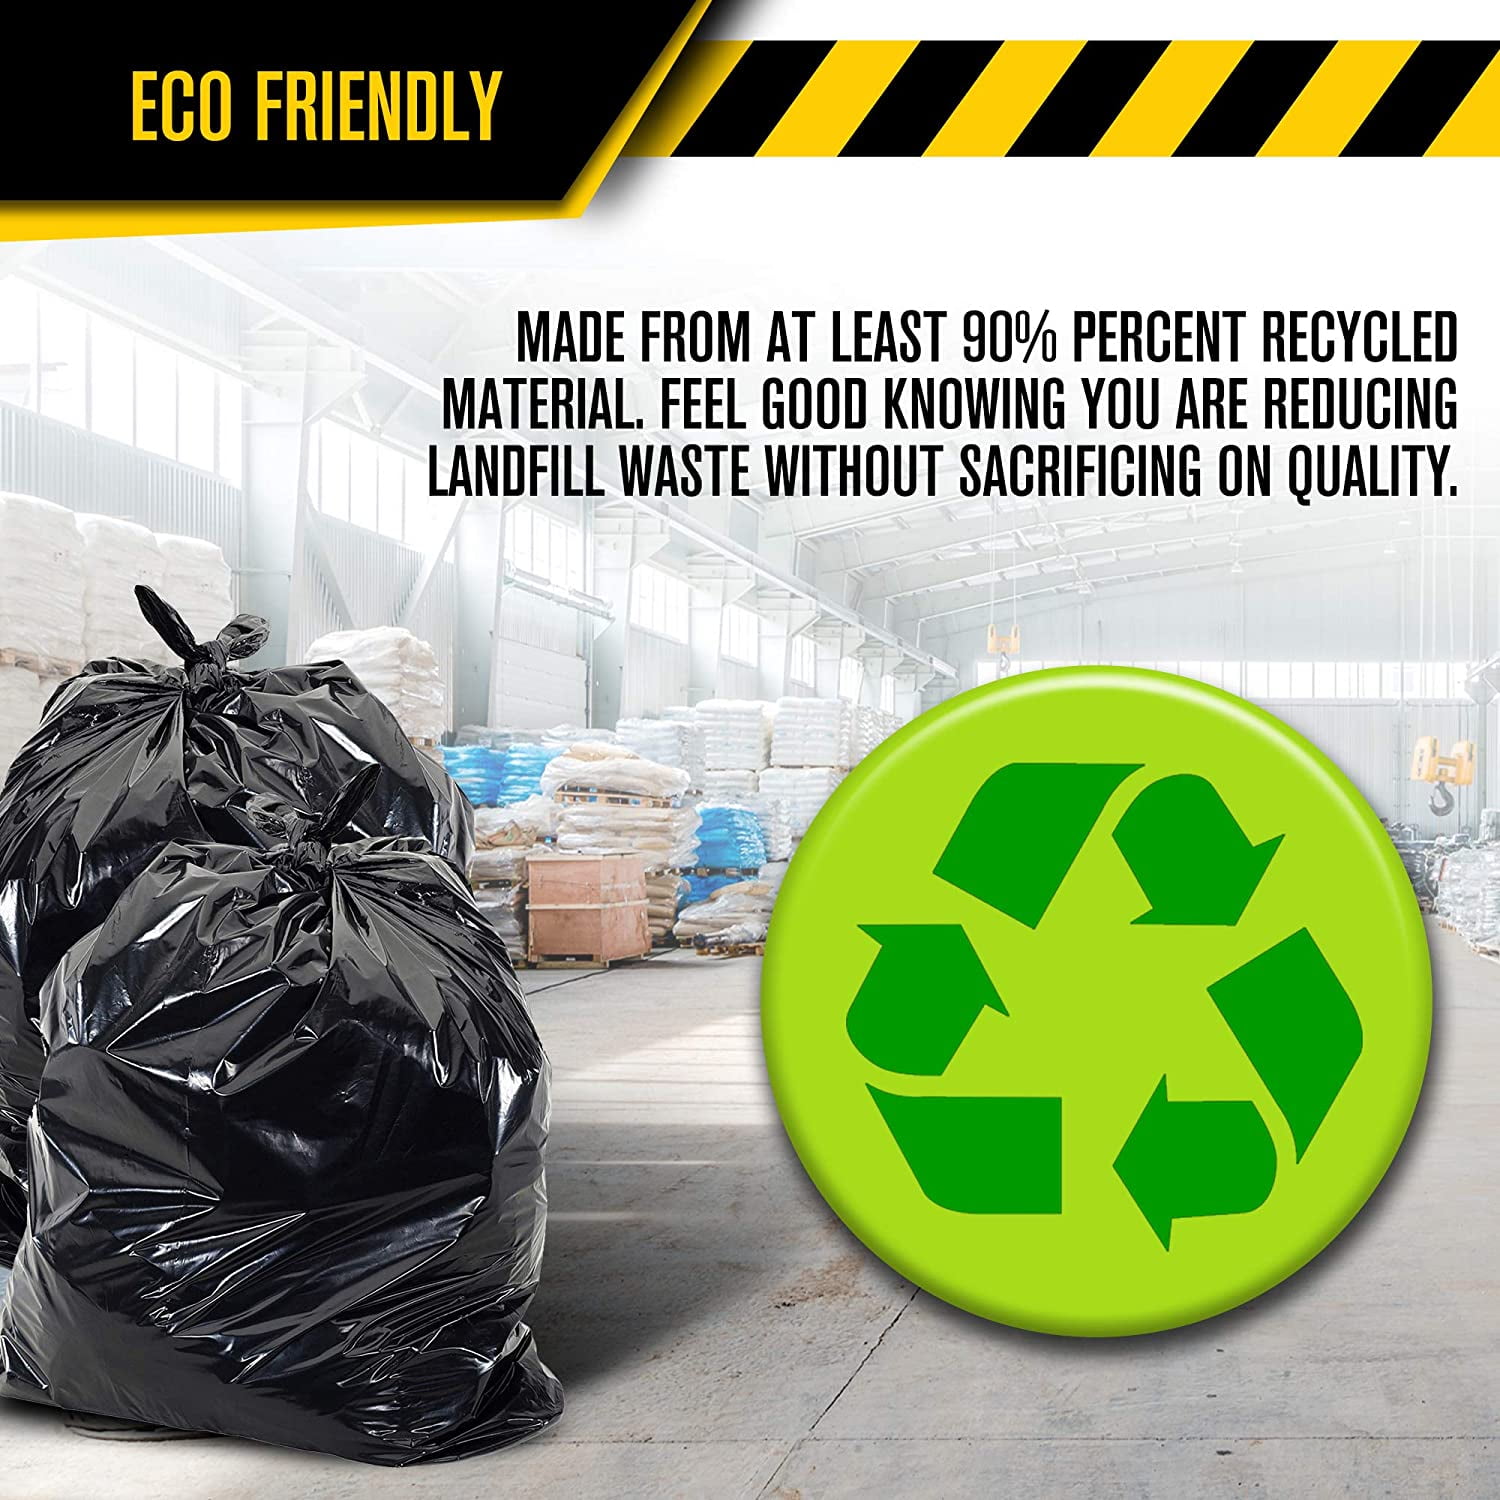 Feisco 3 Gallon Black Trash Bag,Small Drawstring Garbage Bag Trash Can  Liner,100 Counts,0.55 Mil